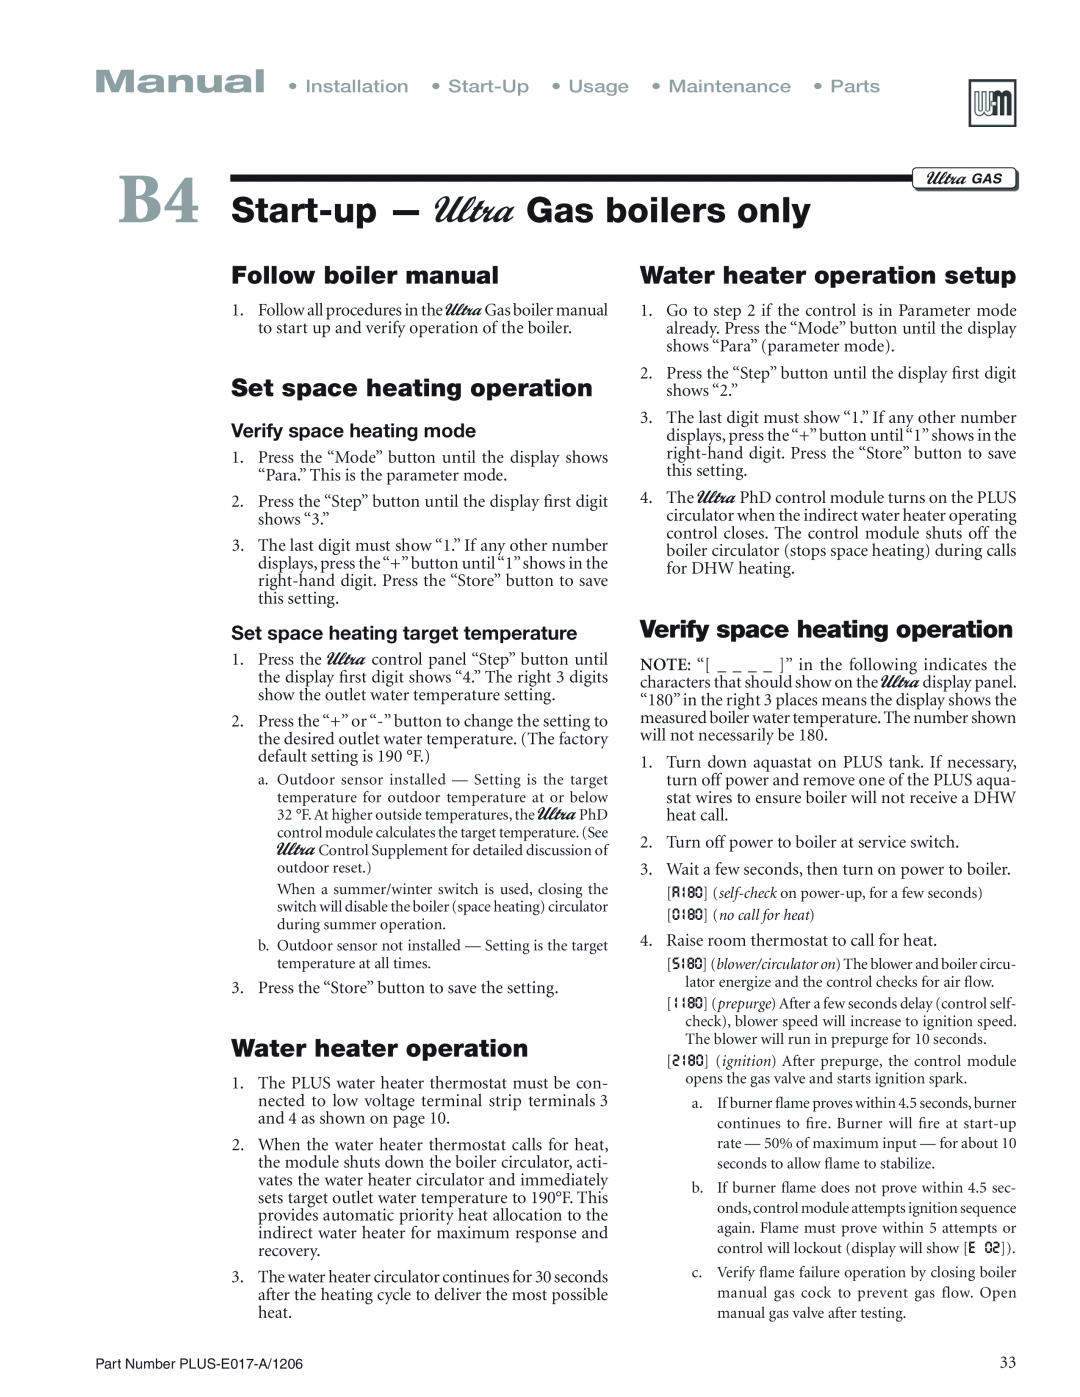 Weil-McLain PLUS-E017-A/1206 B4 Start-up, Follow boiler manual, Water heater operation setup, Set space heating operation 